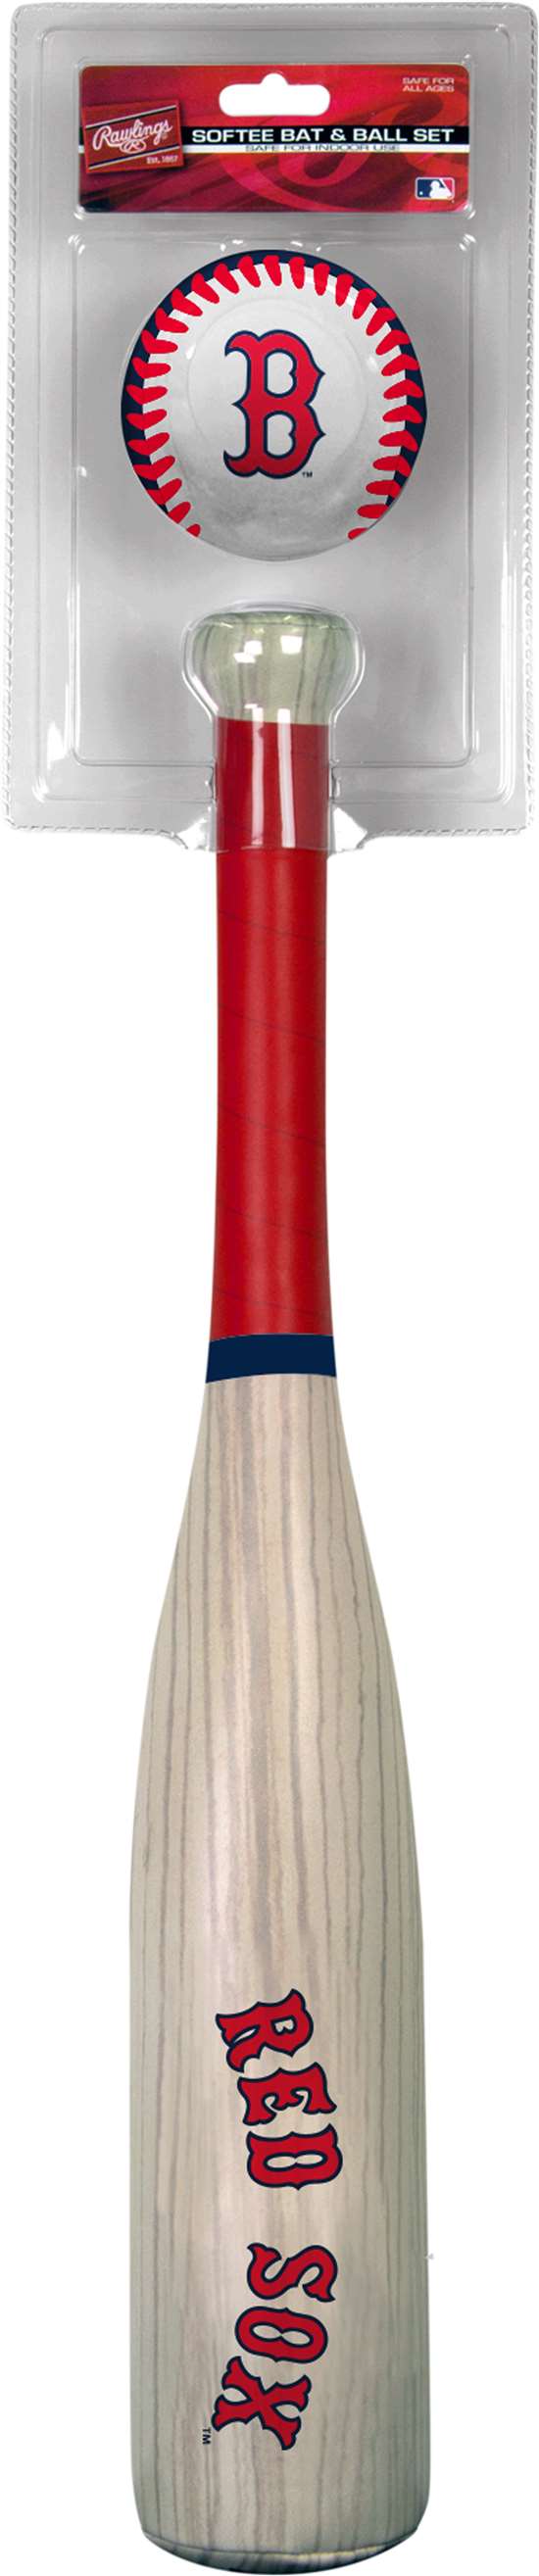 MLB Boston Red Sox Grand Slam Softee Bat and Ball Set (Wood Grain)